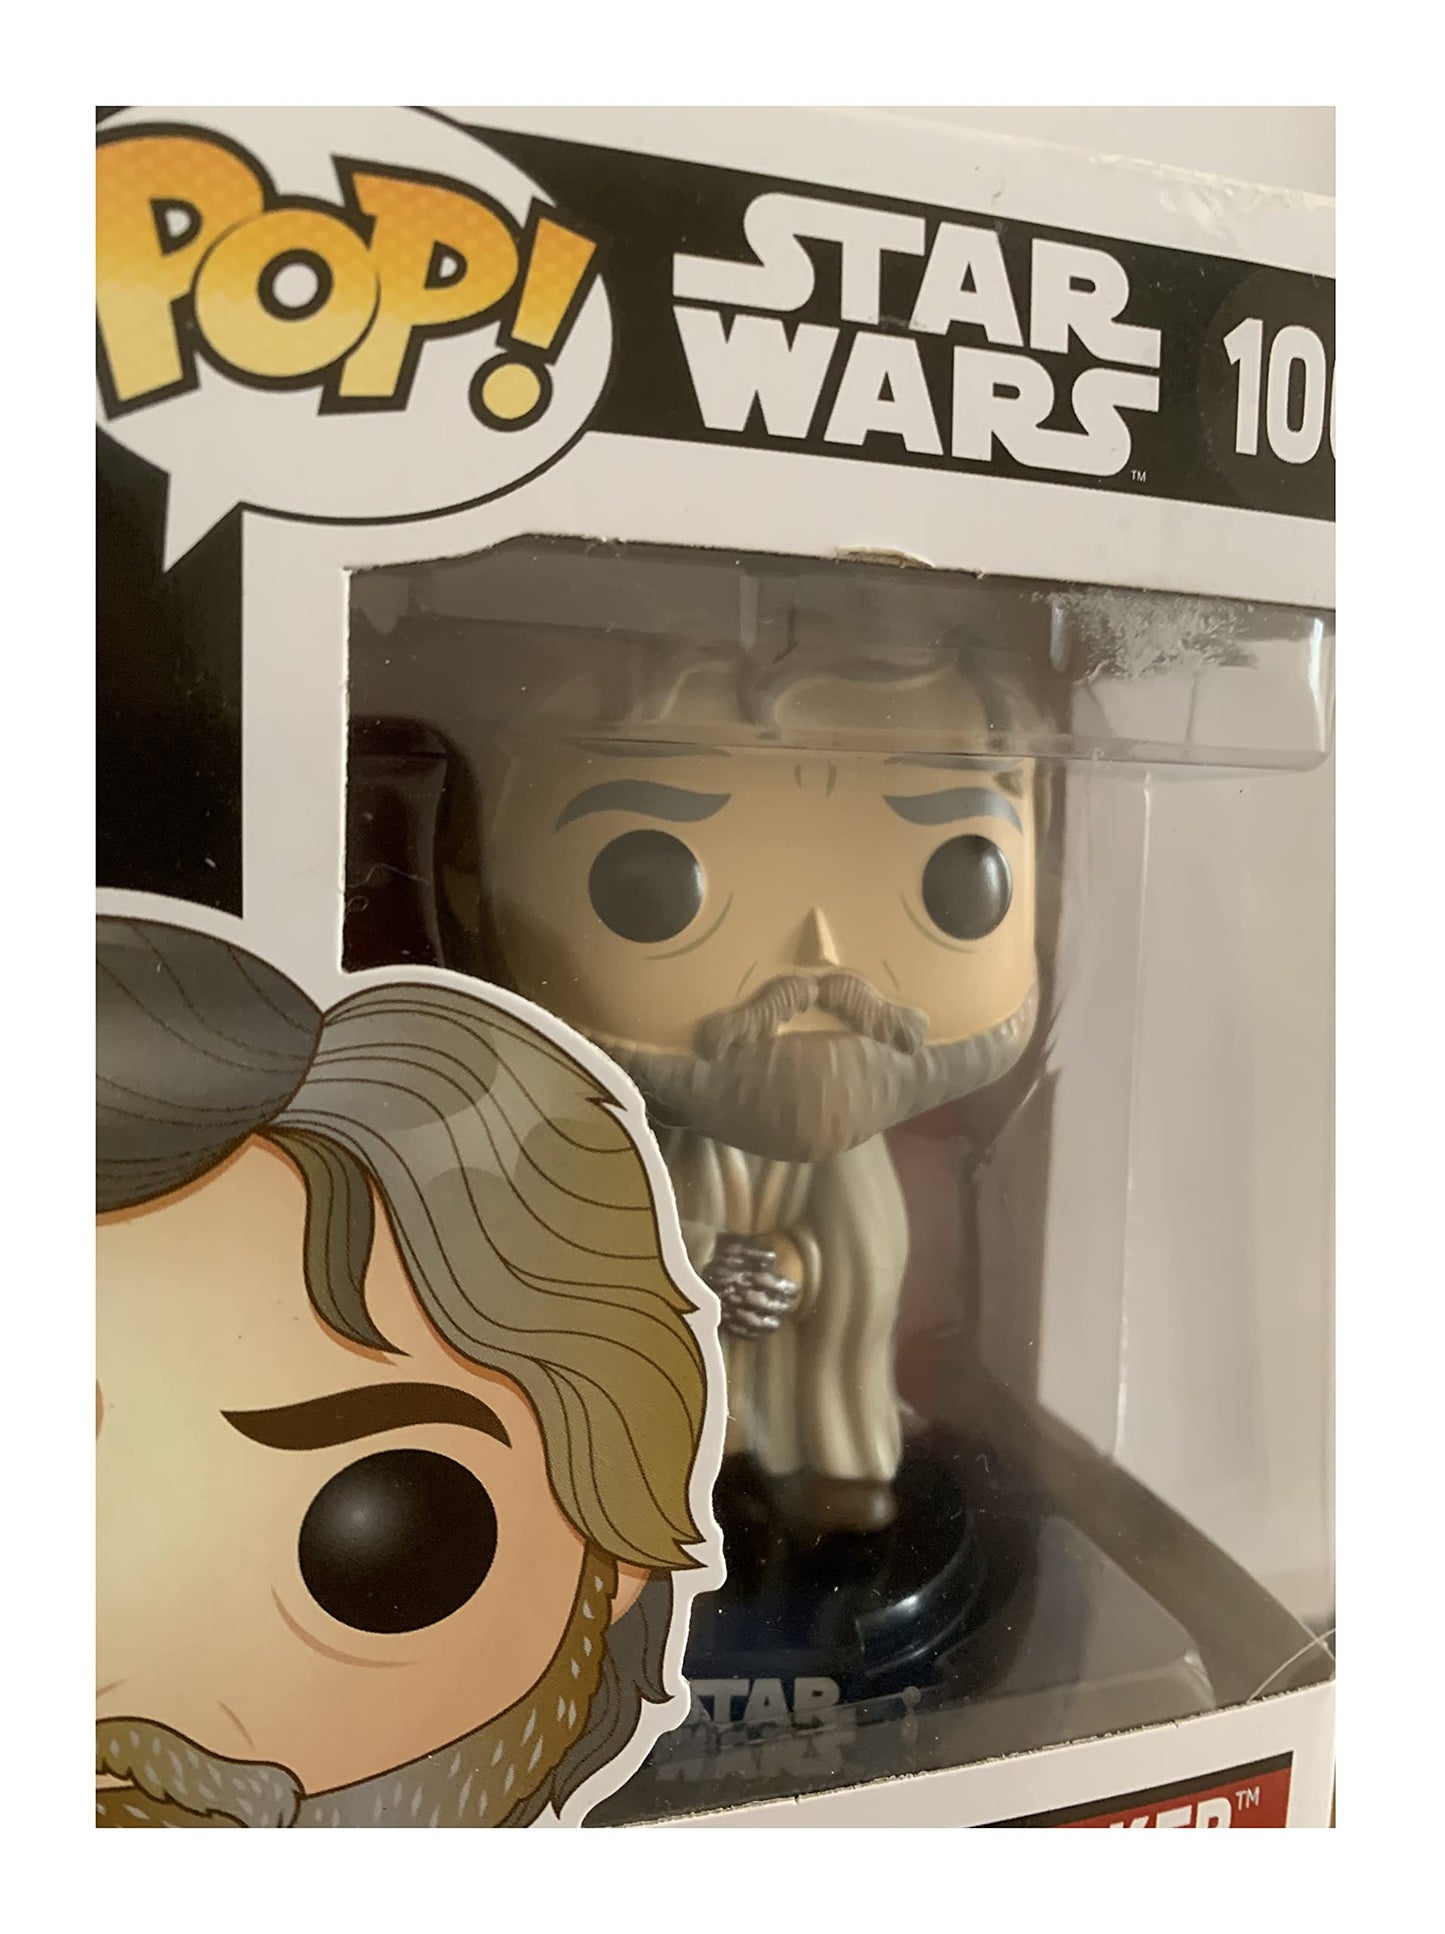 Funko 2016 - Star Wars The Force Awakens - Luke Skywalker Pop Vinyl Bobble Head Figure - Brand New Shop Stock Room Find